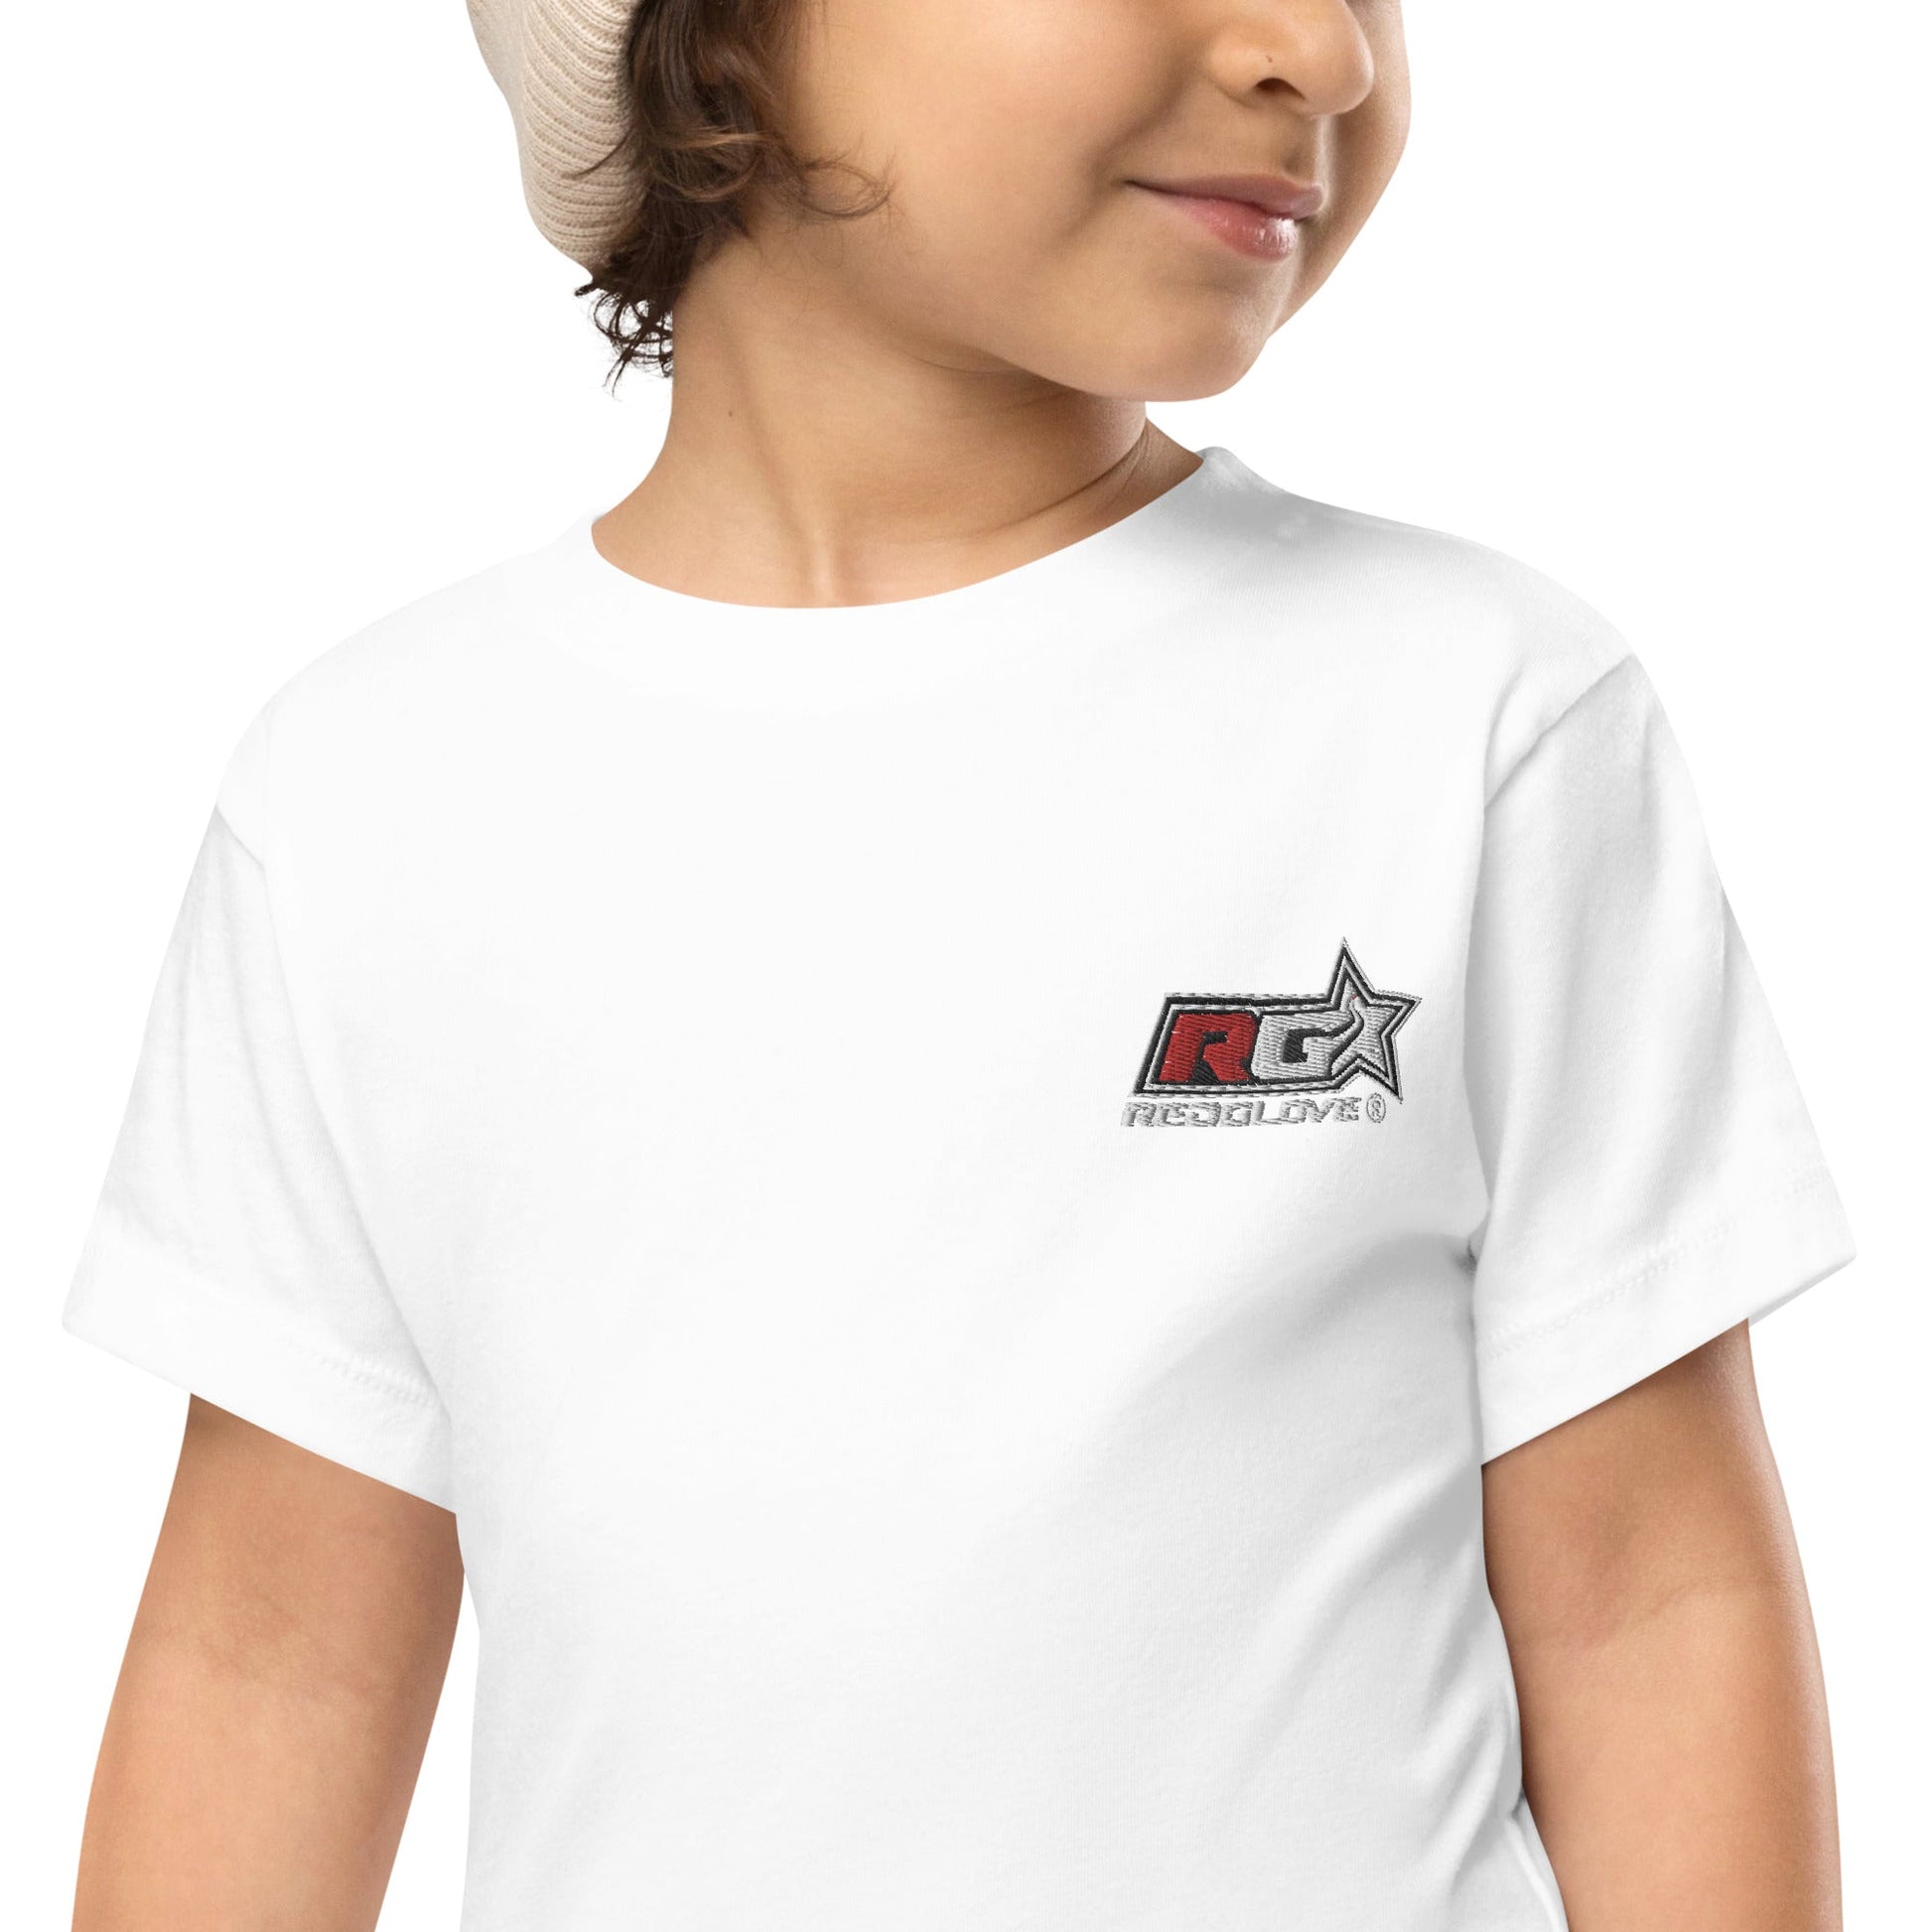 Camiseta Redglove de manga corta para niño/a - Redglove